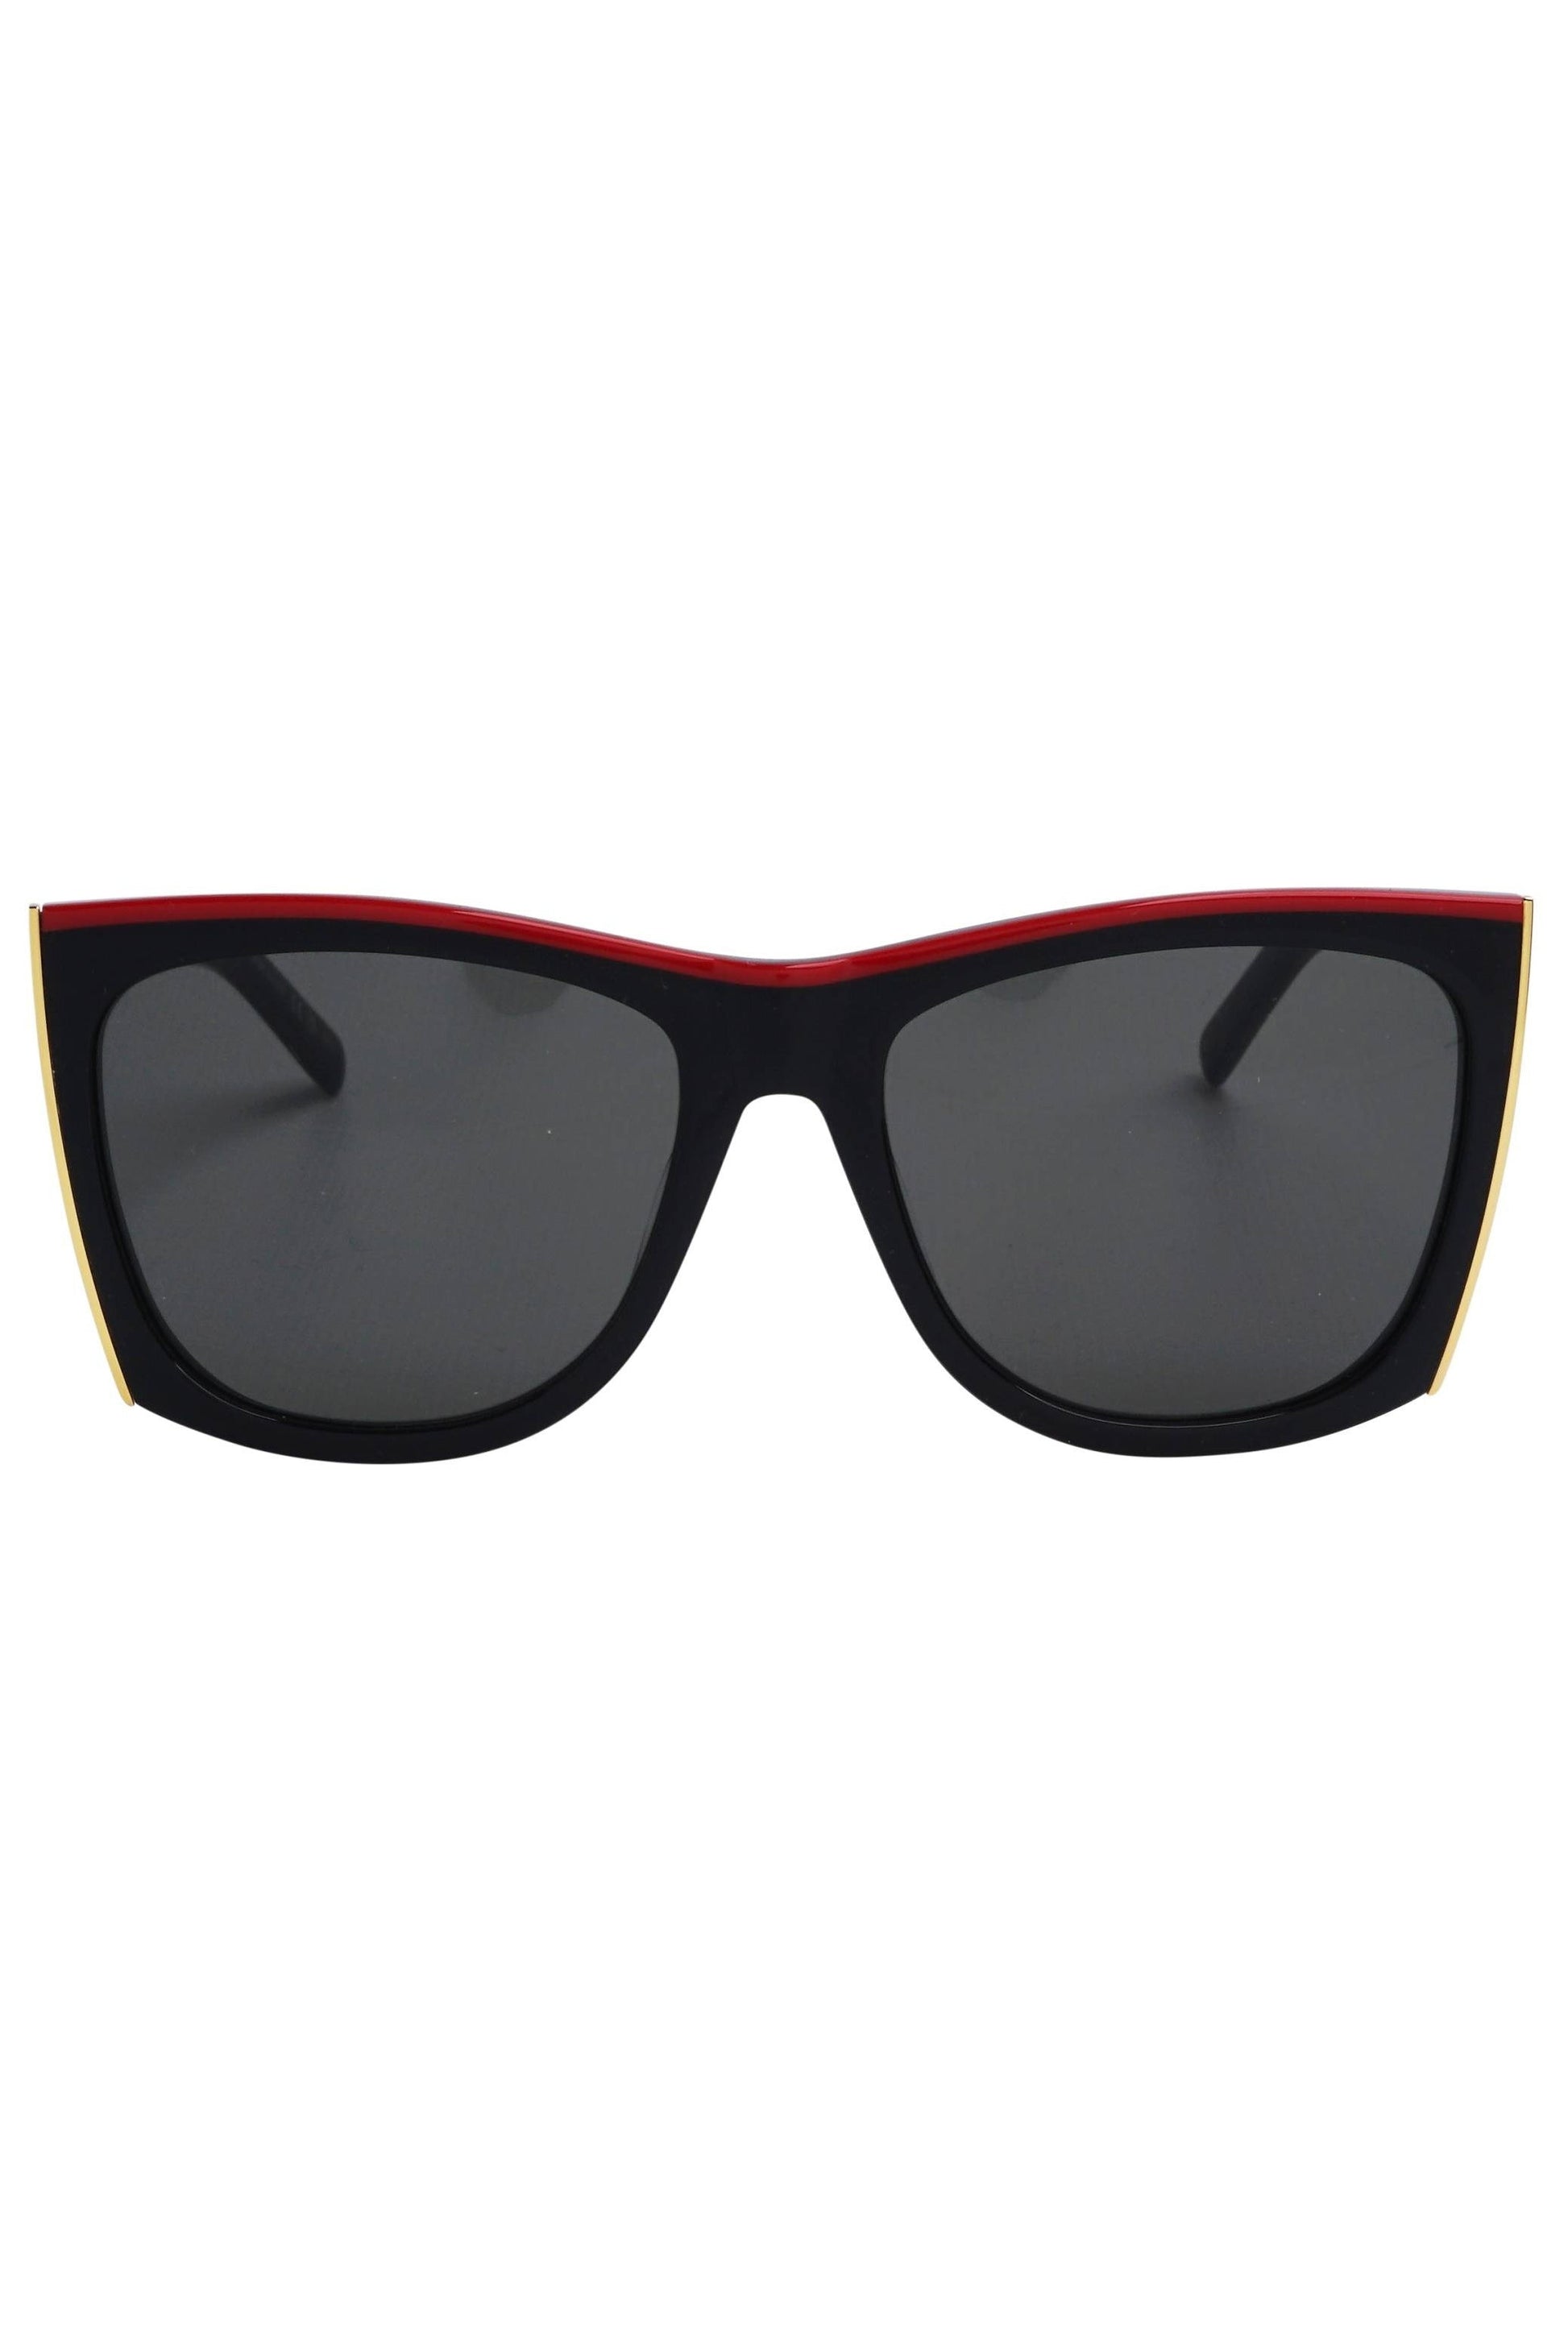 SAINT LAURENT-Cat Eye Tinted Sunglasses-BLACK/GREY